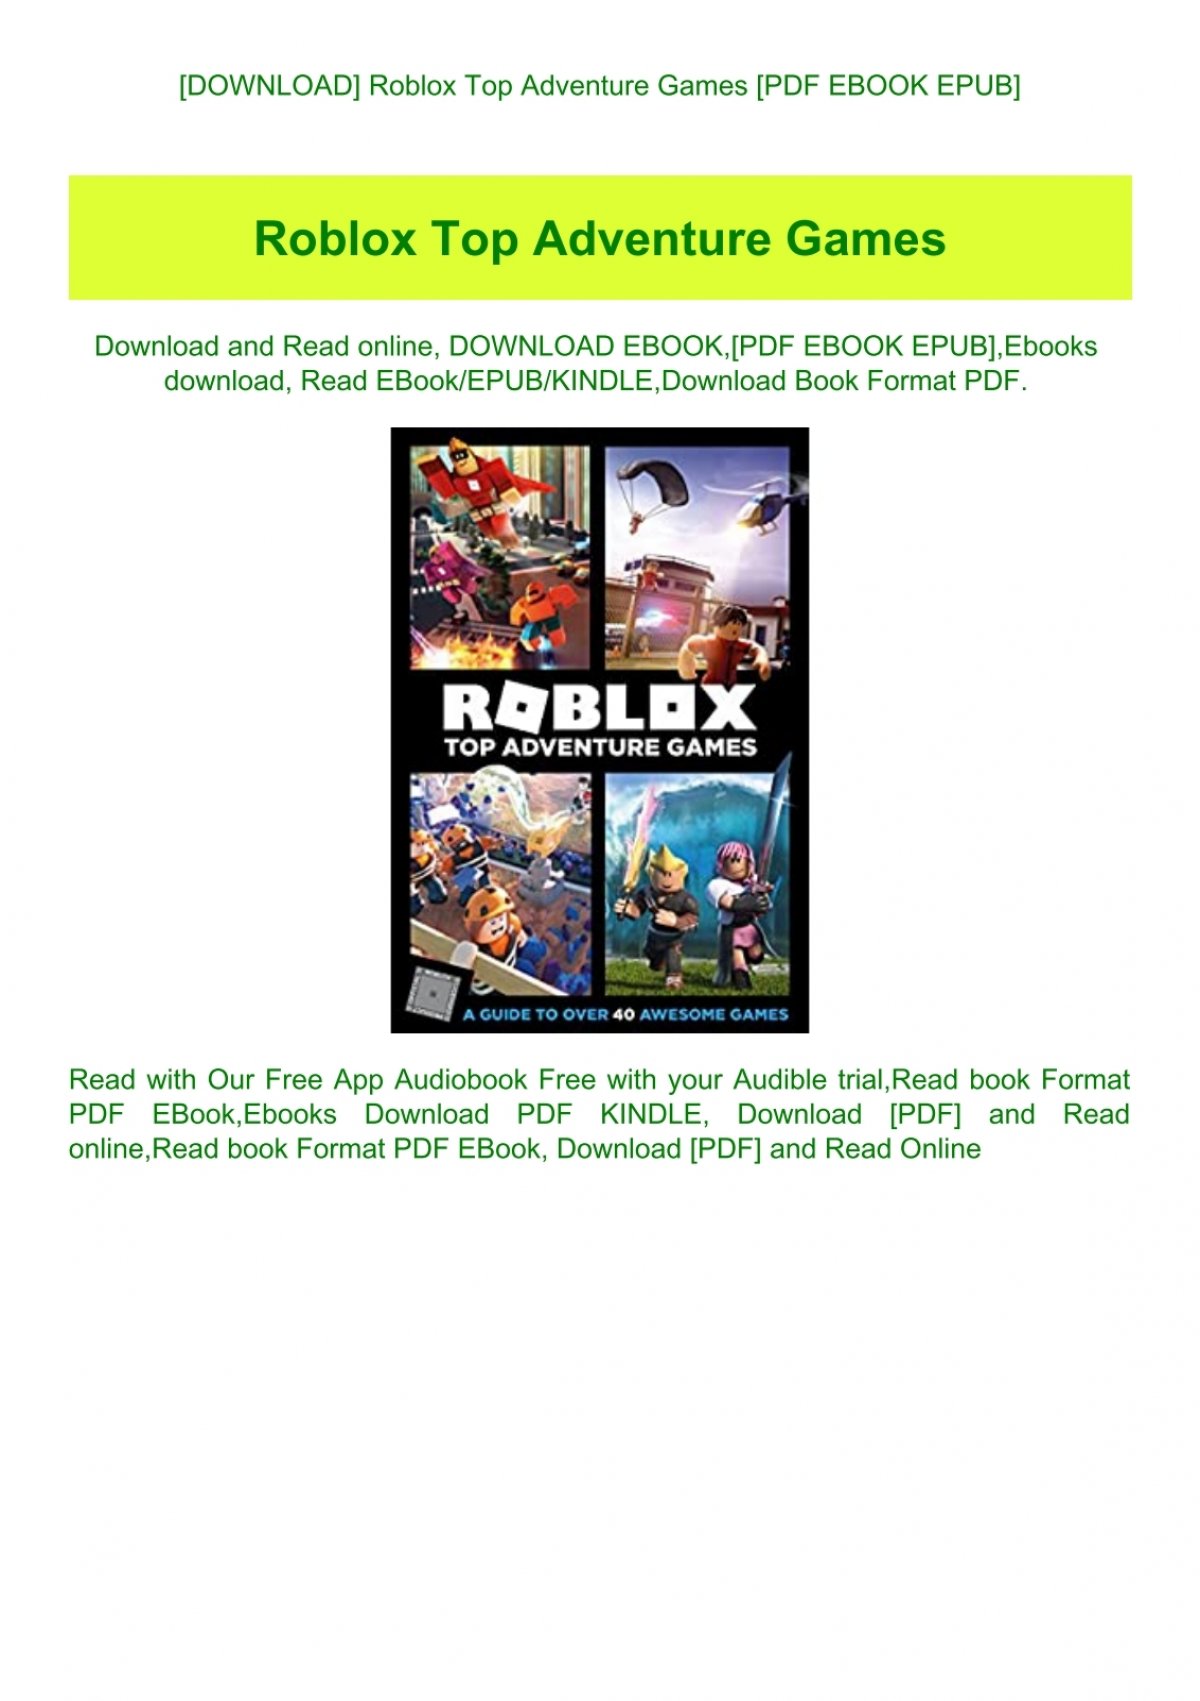 Roblox App Download Kindle